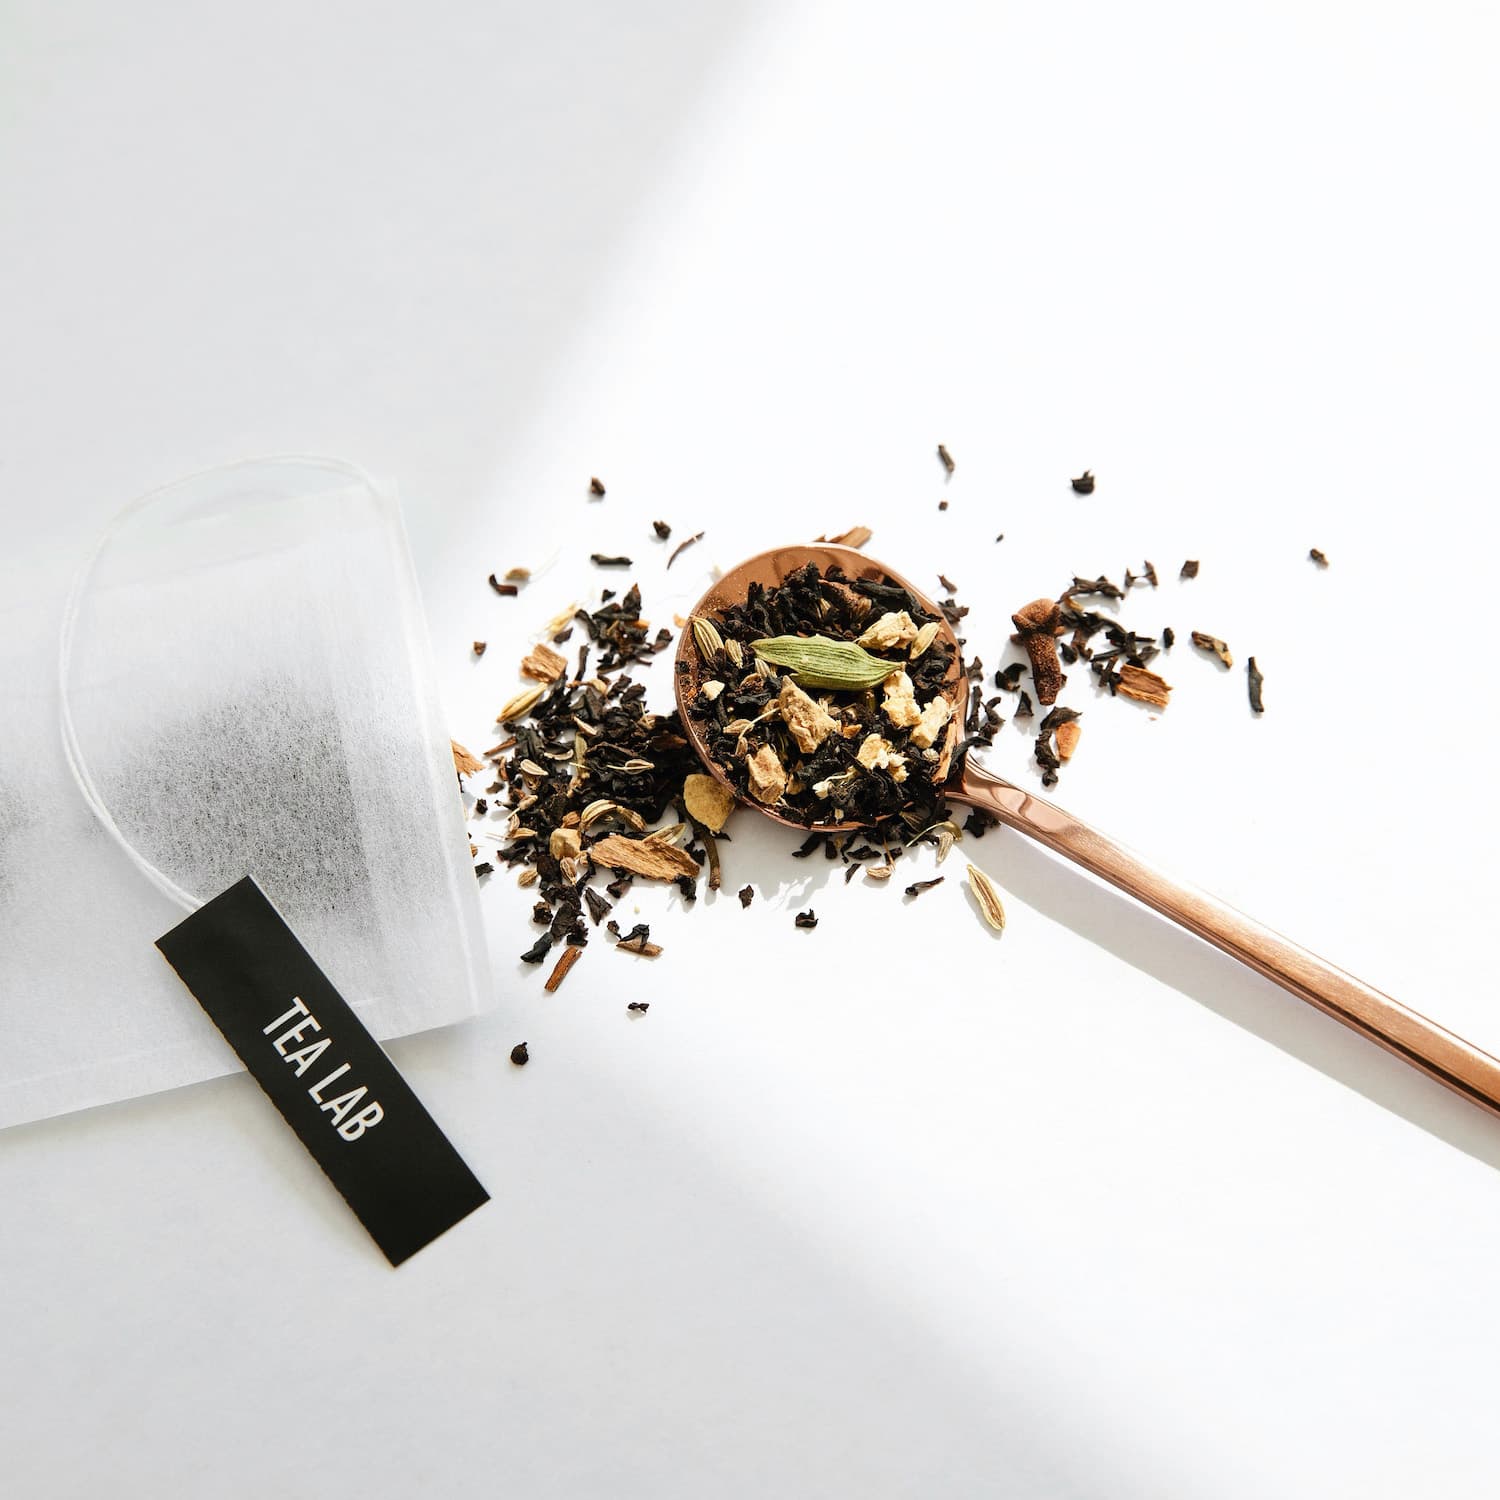 Spiced Chai black tea in eco paper filter tea bag